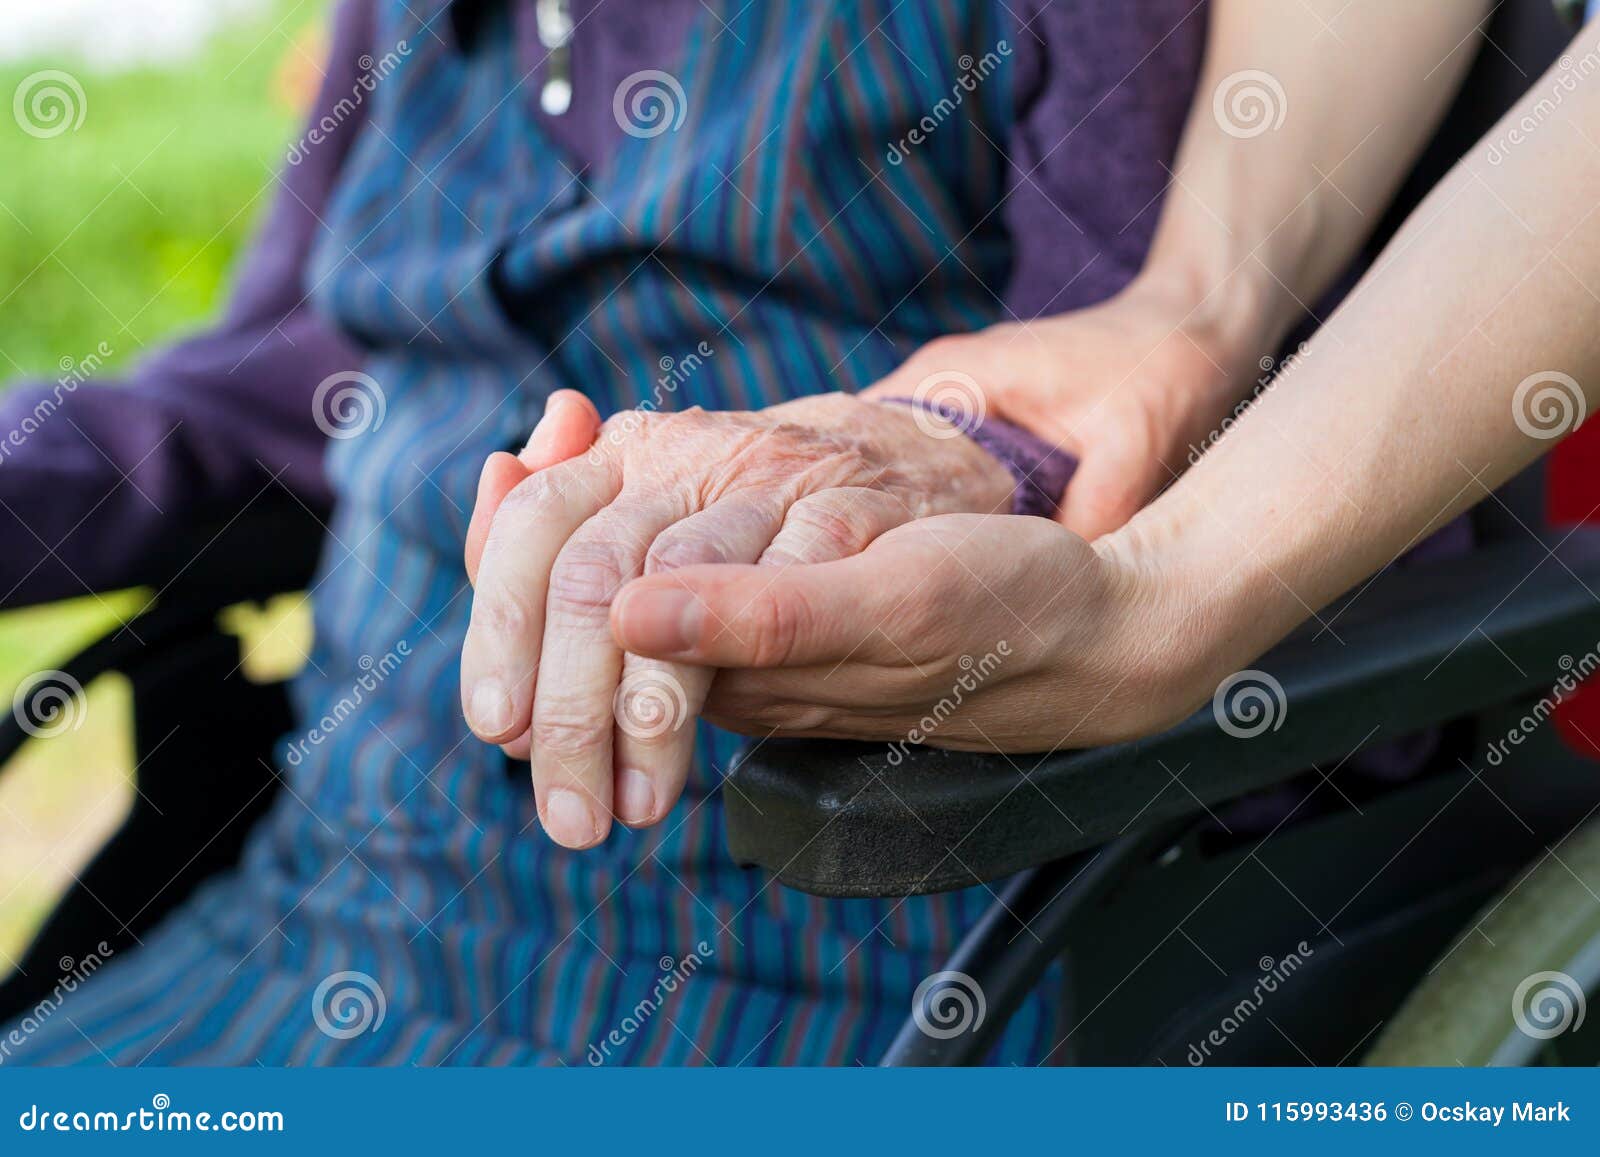 holding hands - parkinson disease